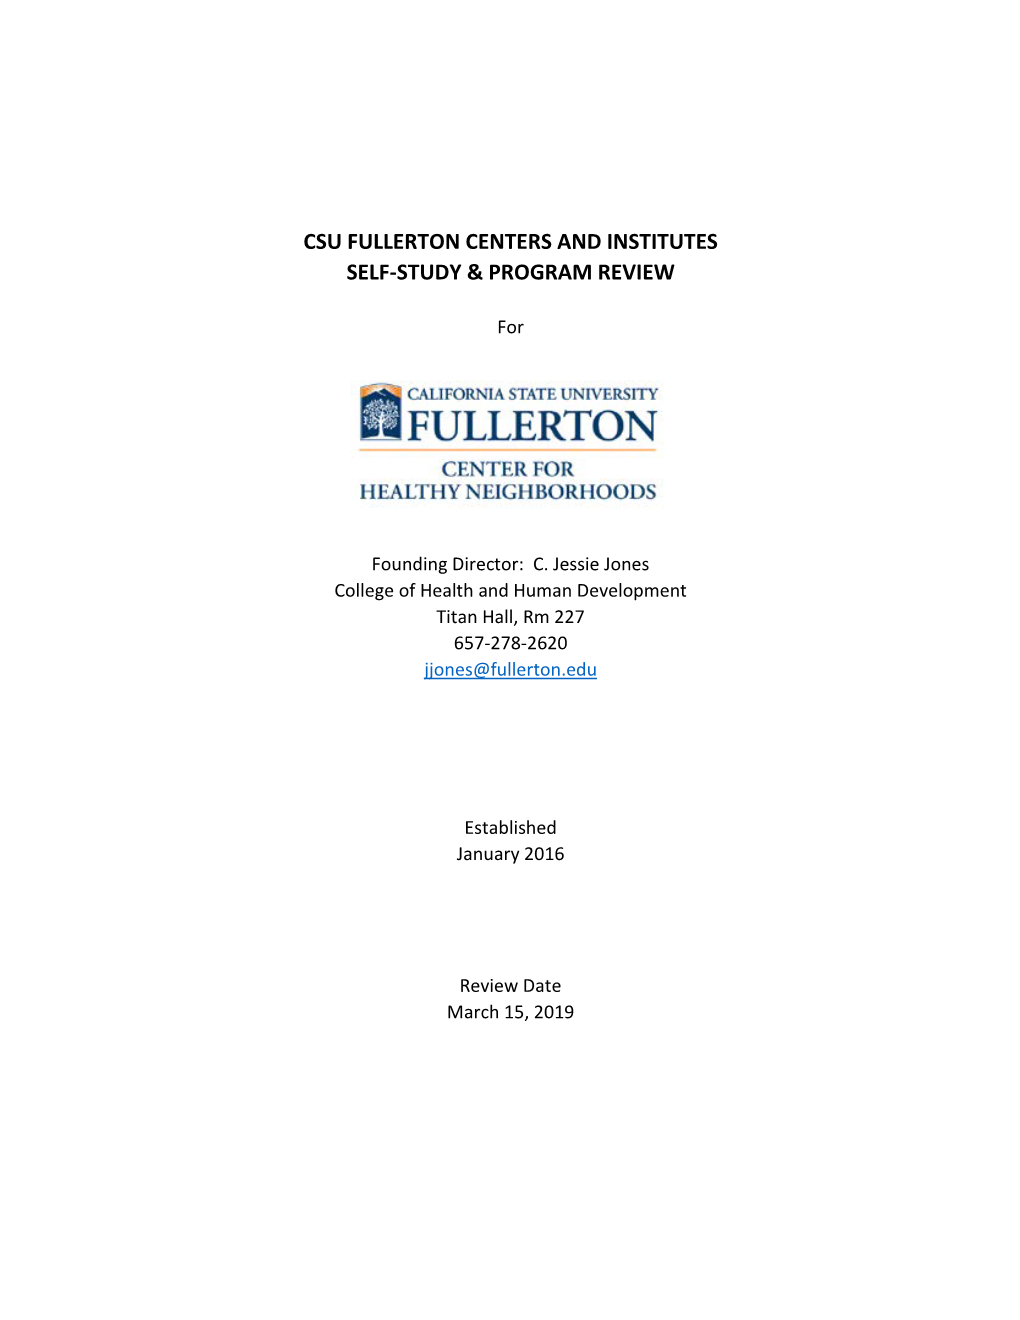 Csu Fullerton Centers and Institutes Self-Study & Program Review